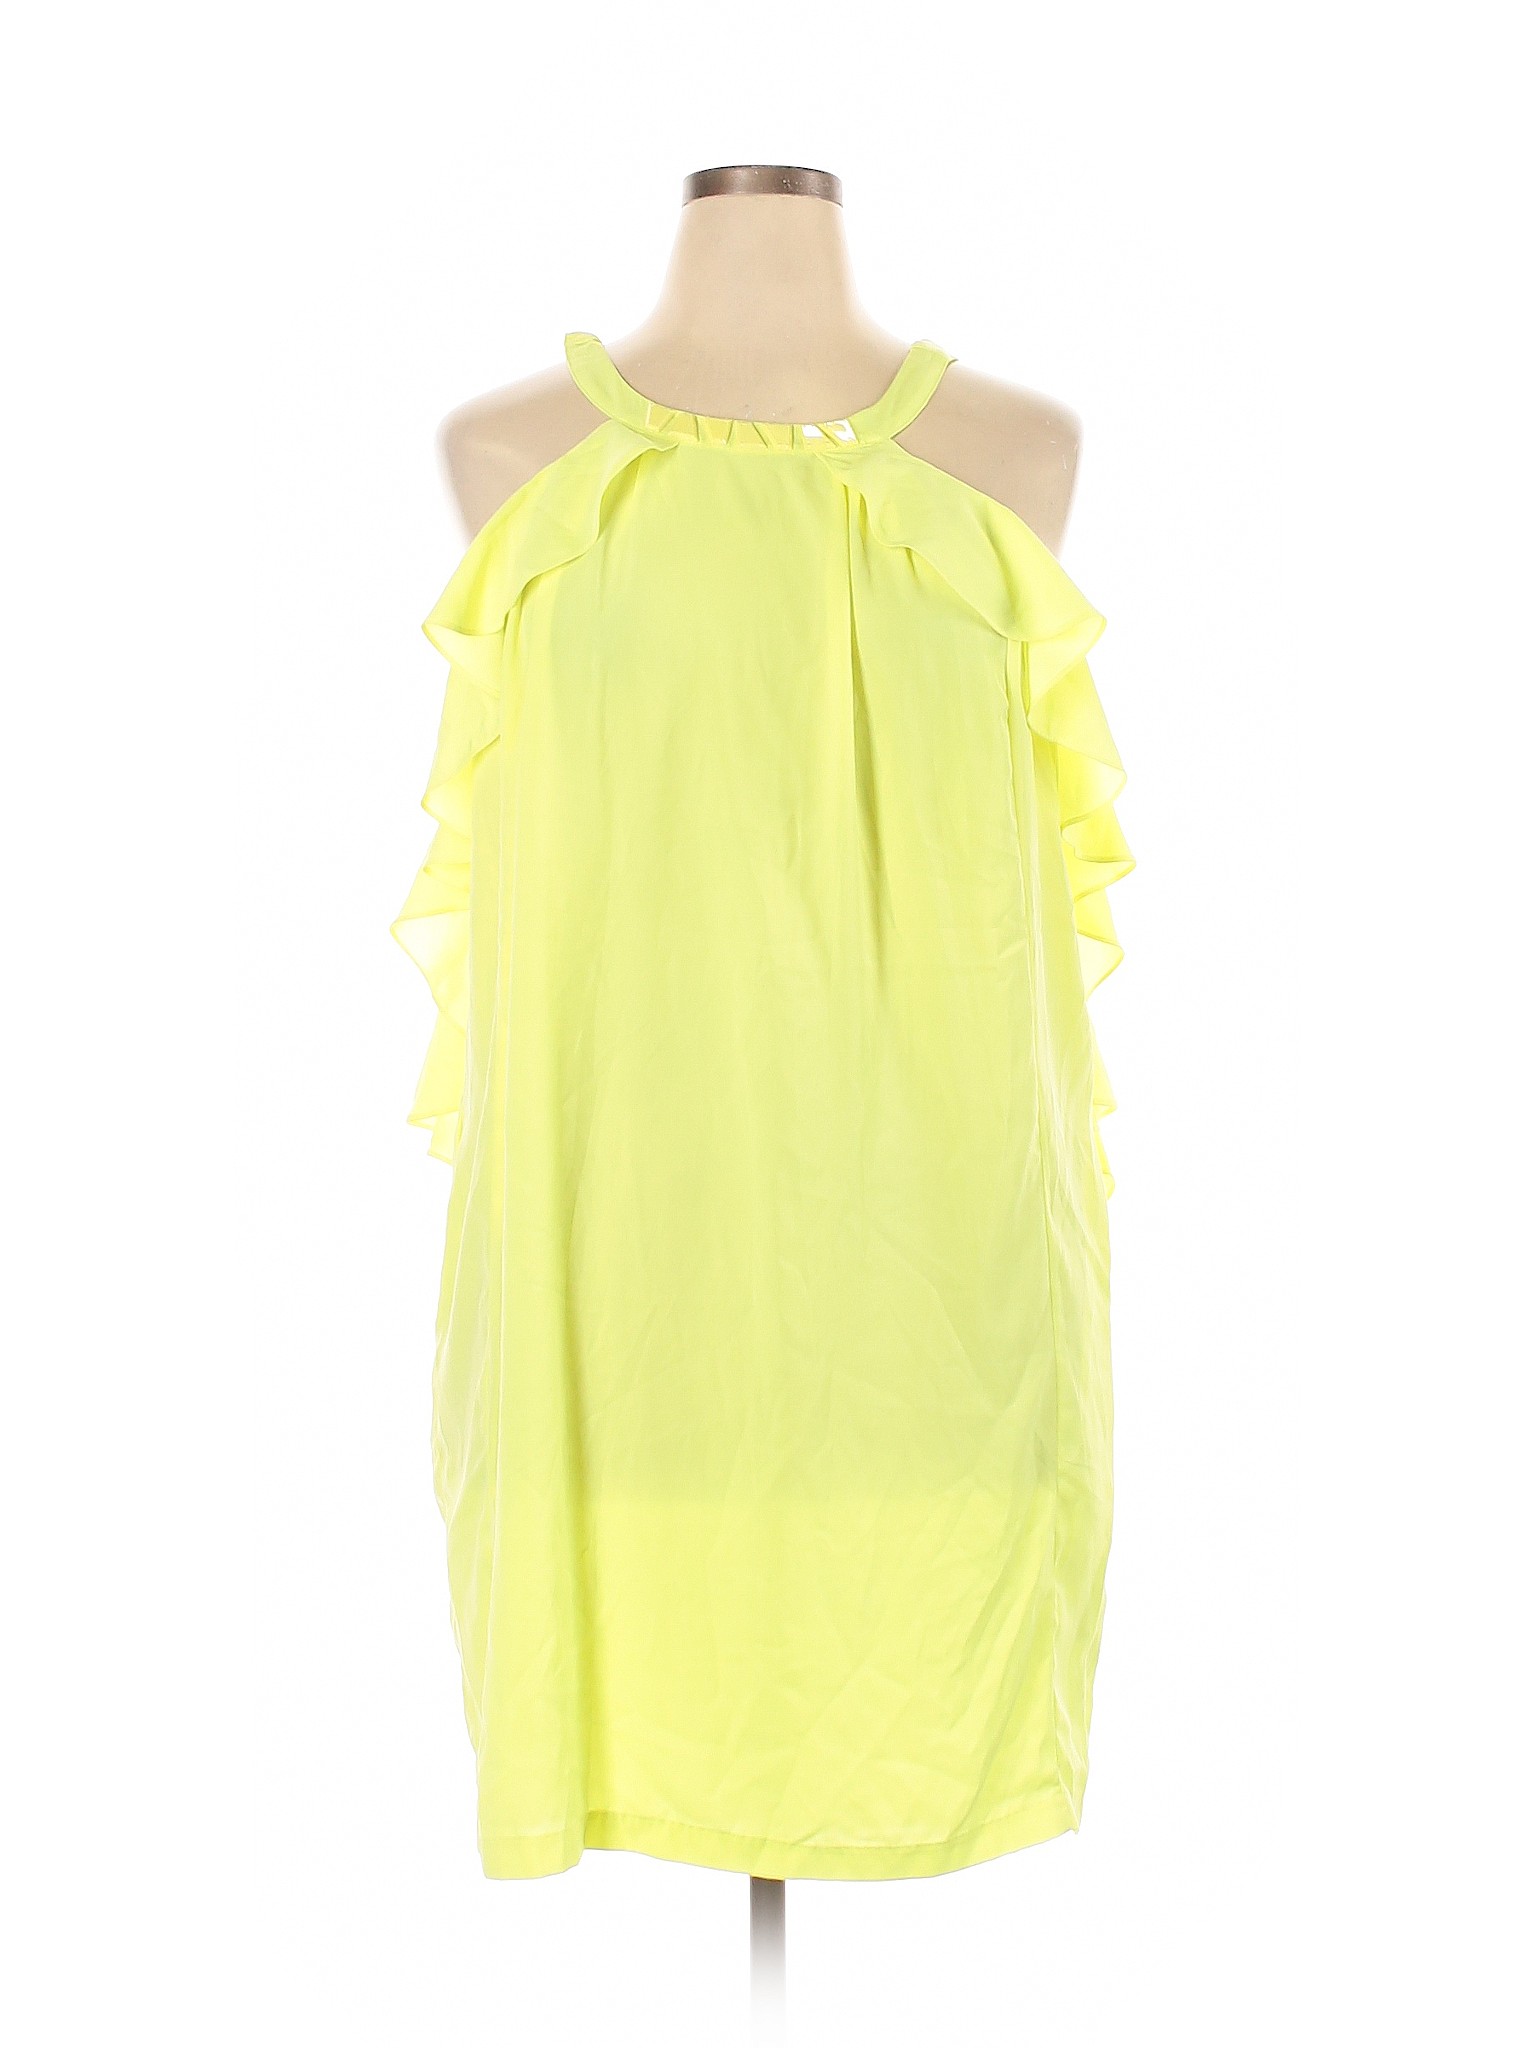 H&M Women Yellow Cocktail Dress 14 | eBay